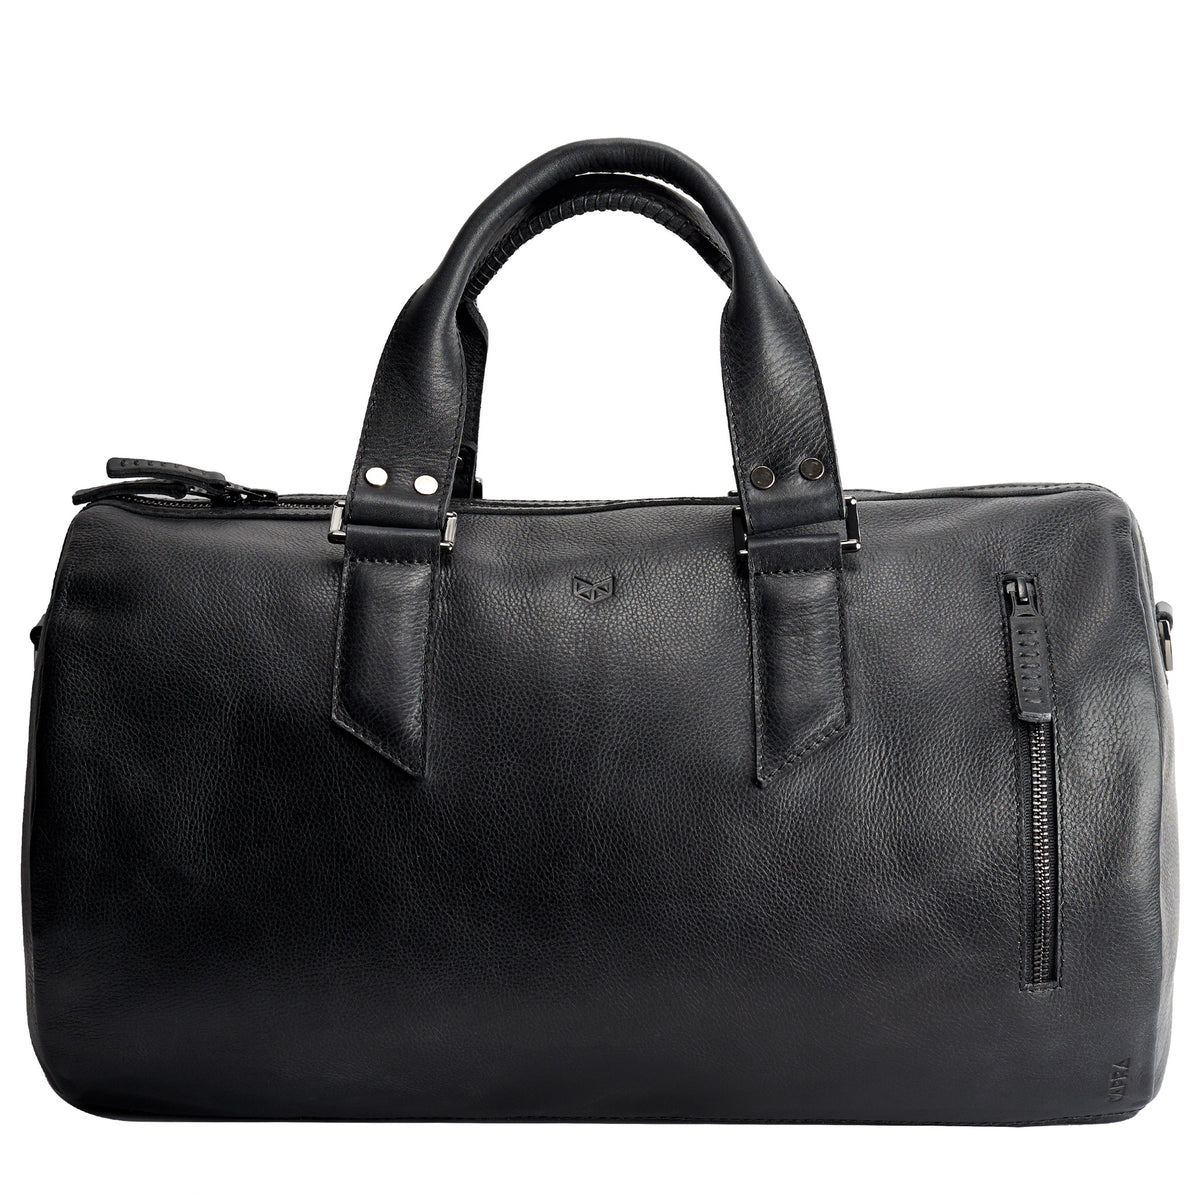 Black Duffle leather travel bag for men. Gym athletic bag 